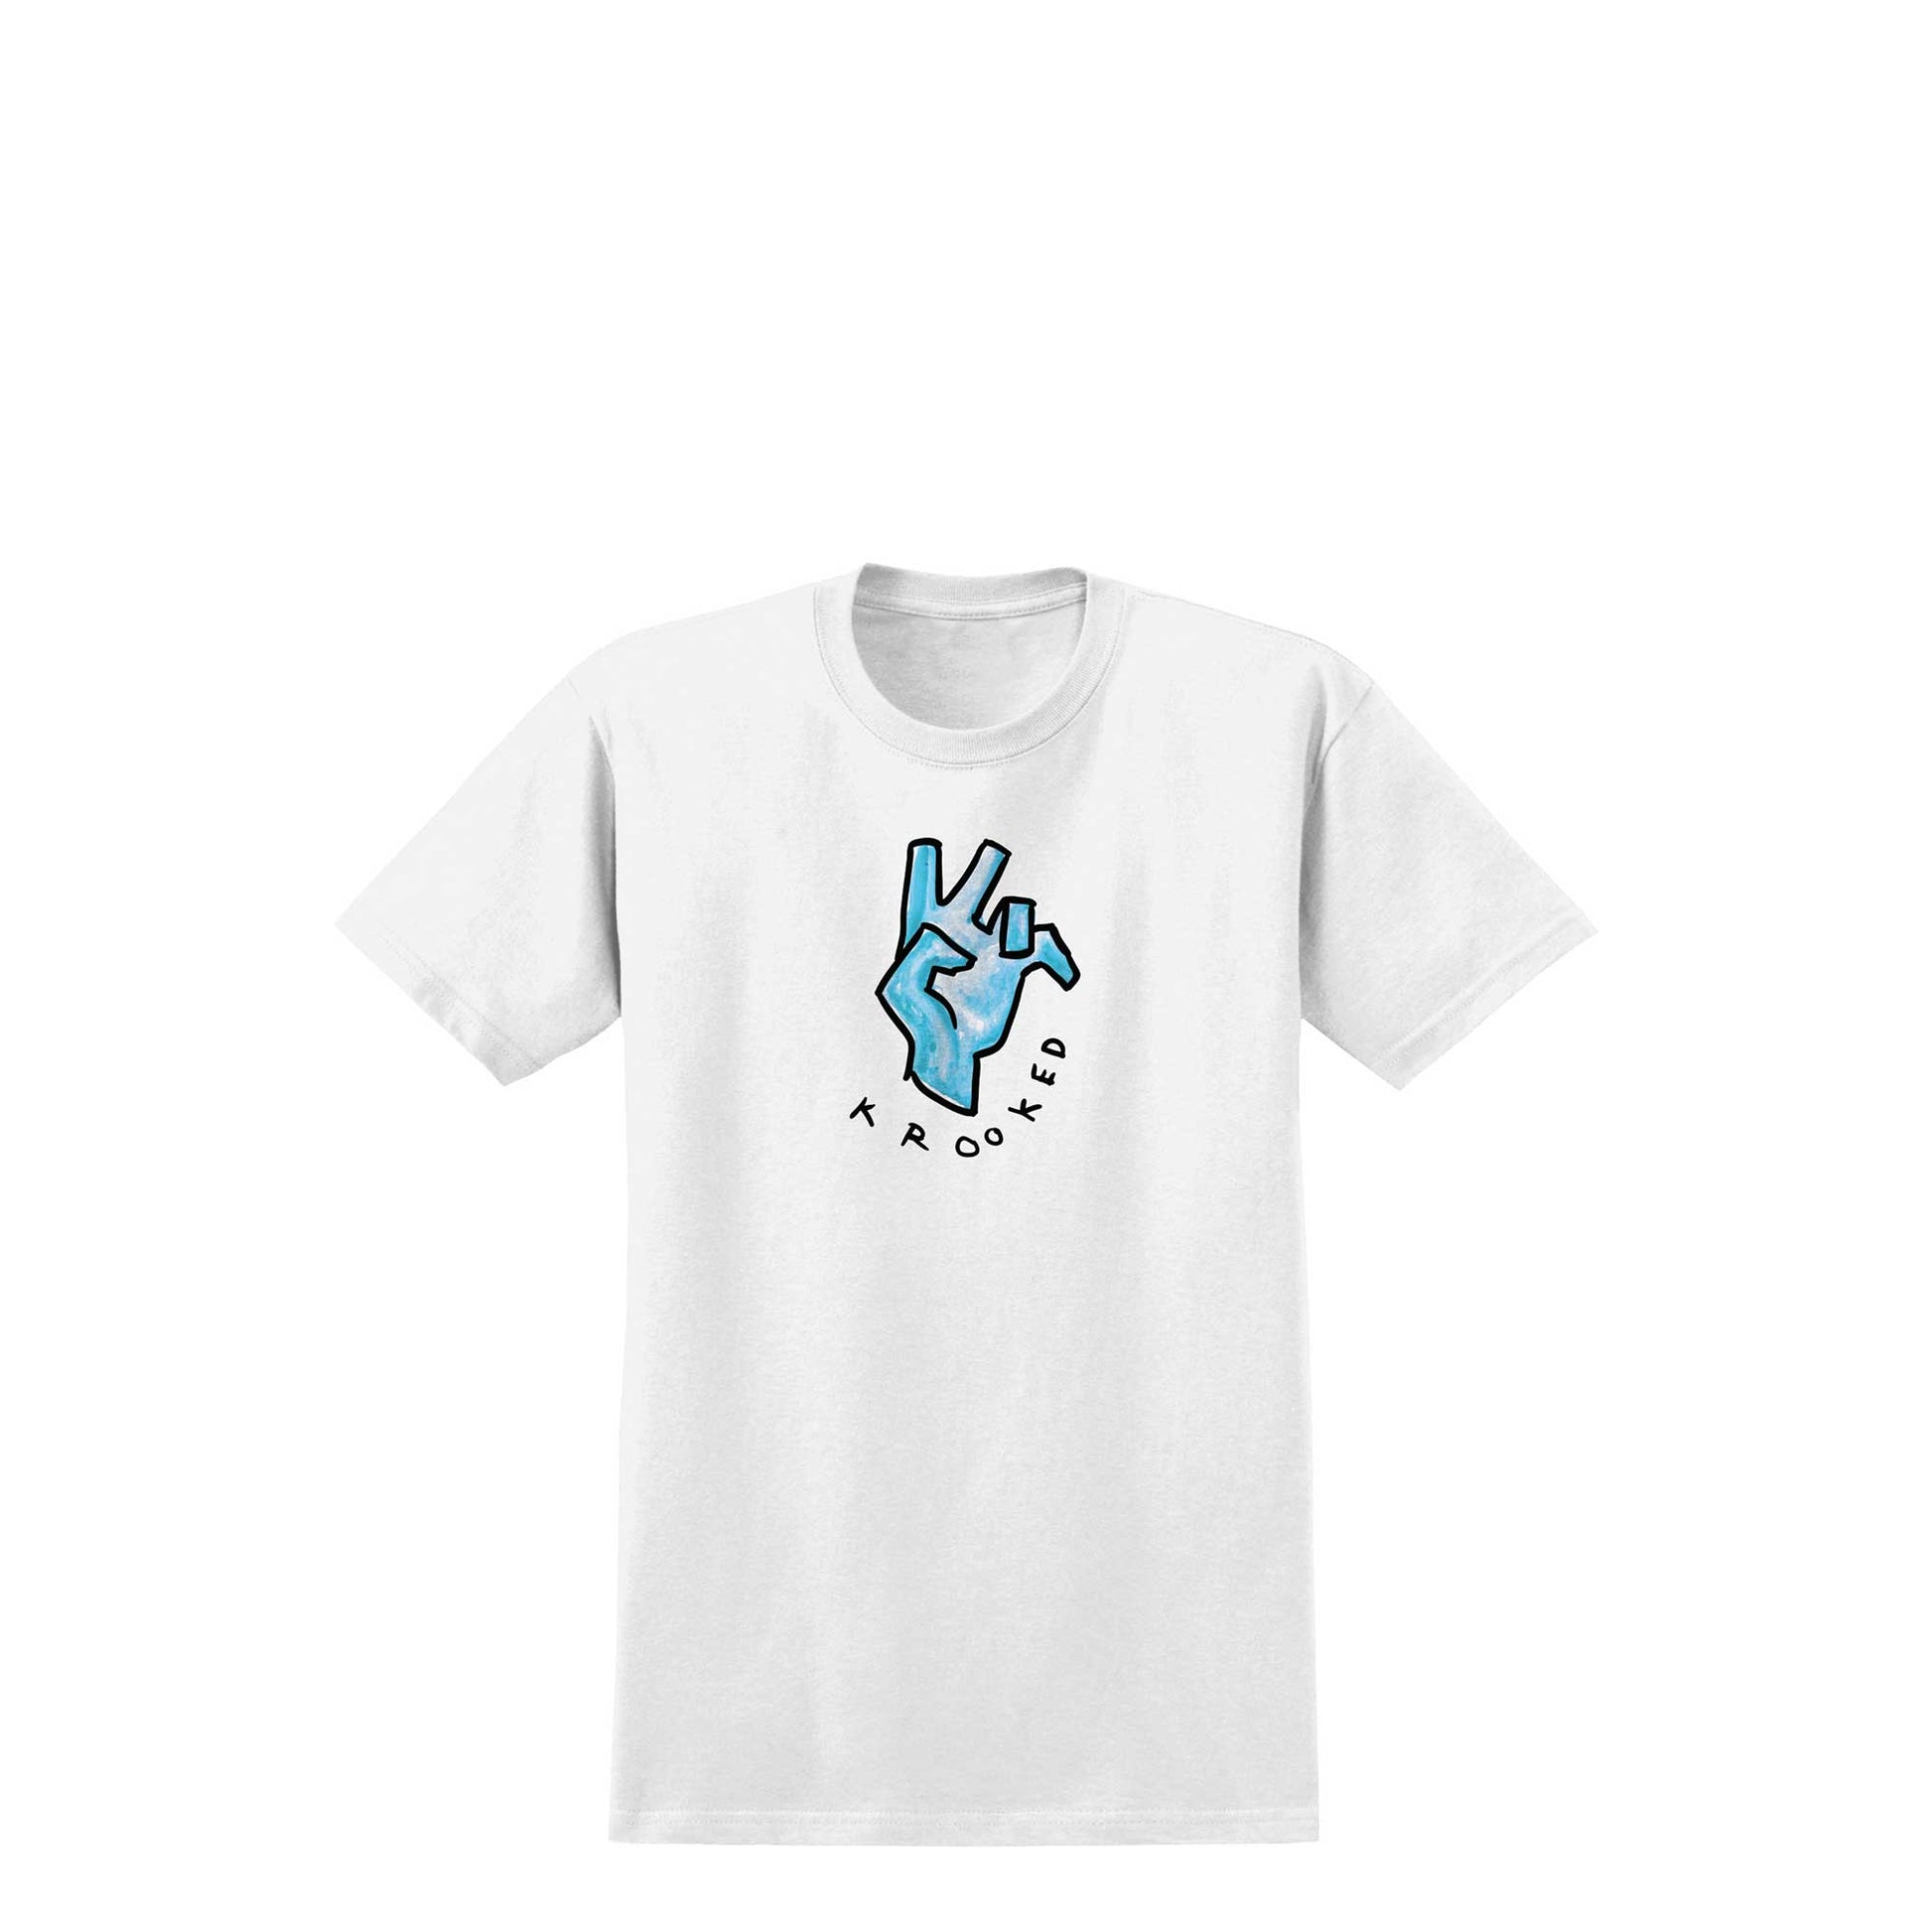 Krooked Handy T-Shirt, white w/ blue & black print - Tiki Room Skateboards - 1